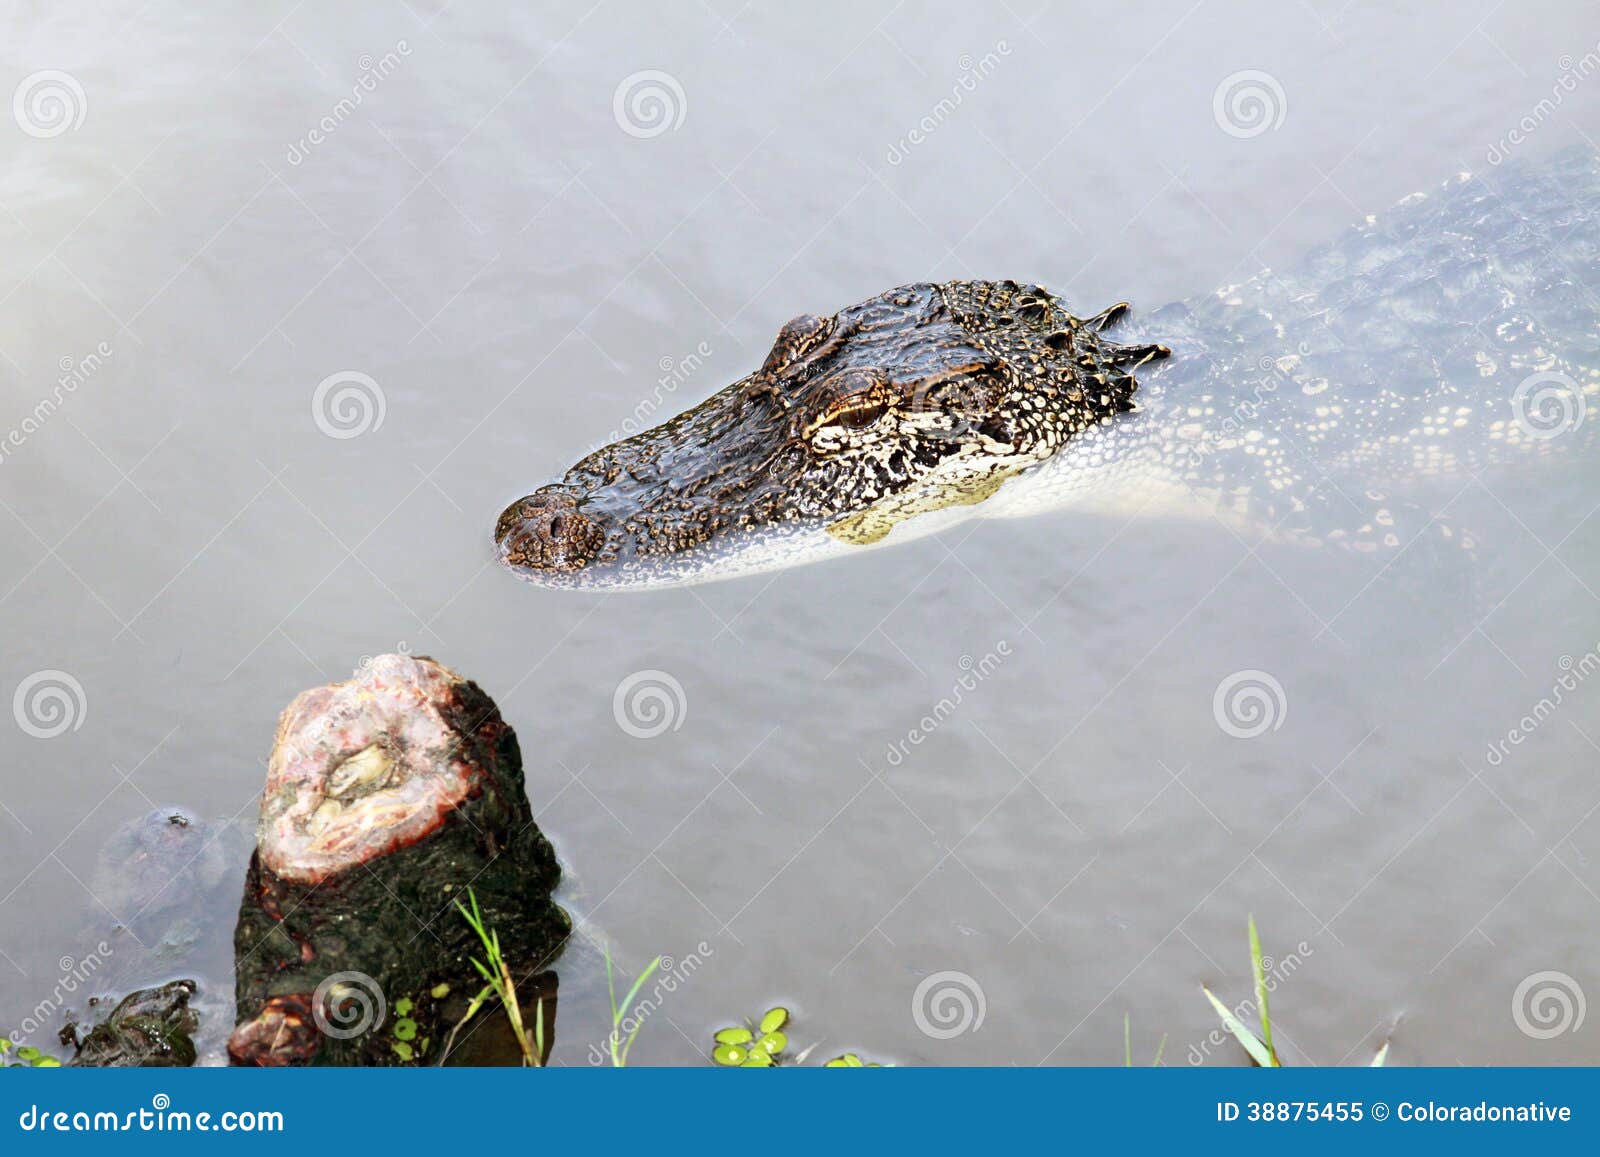 closeup of a small alligator